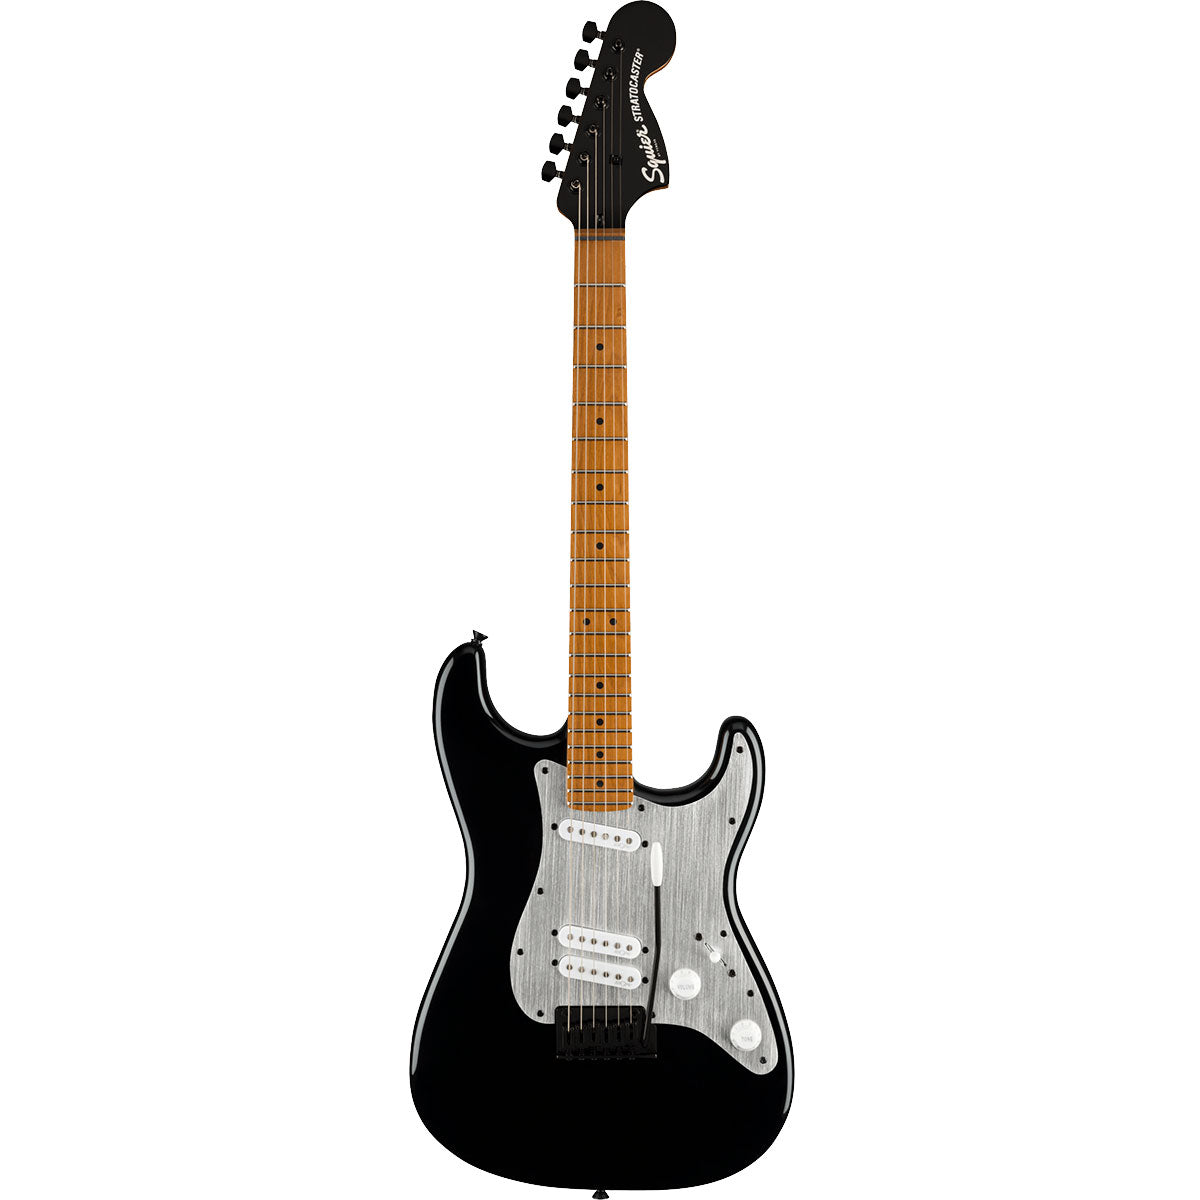 Squier Contemporary Stratocaster Special - Black View 2